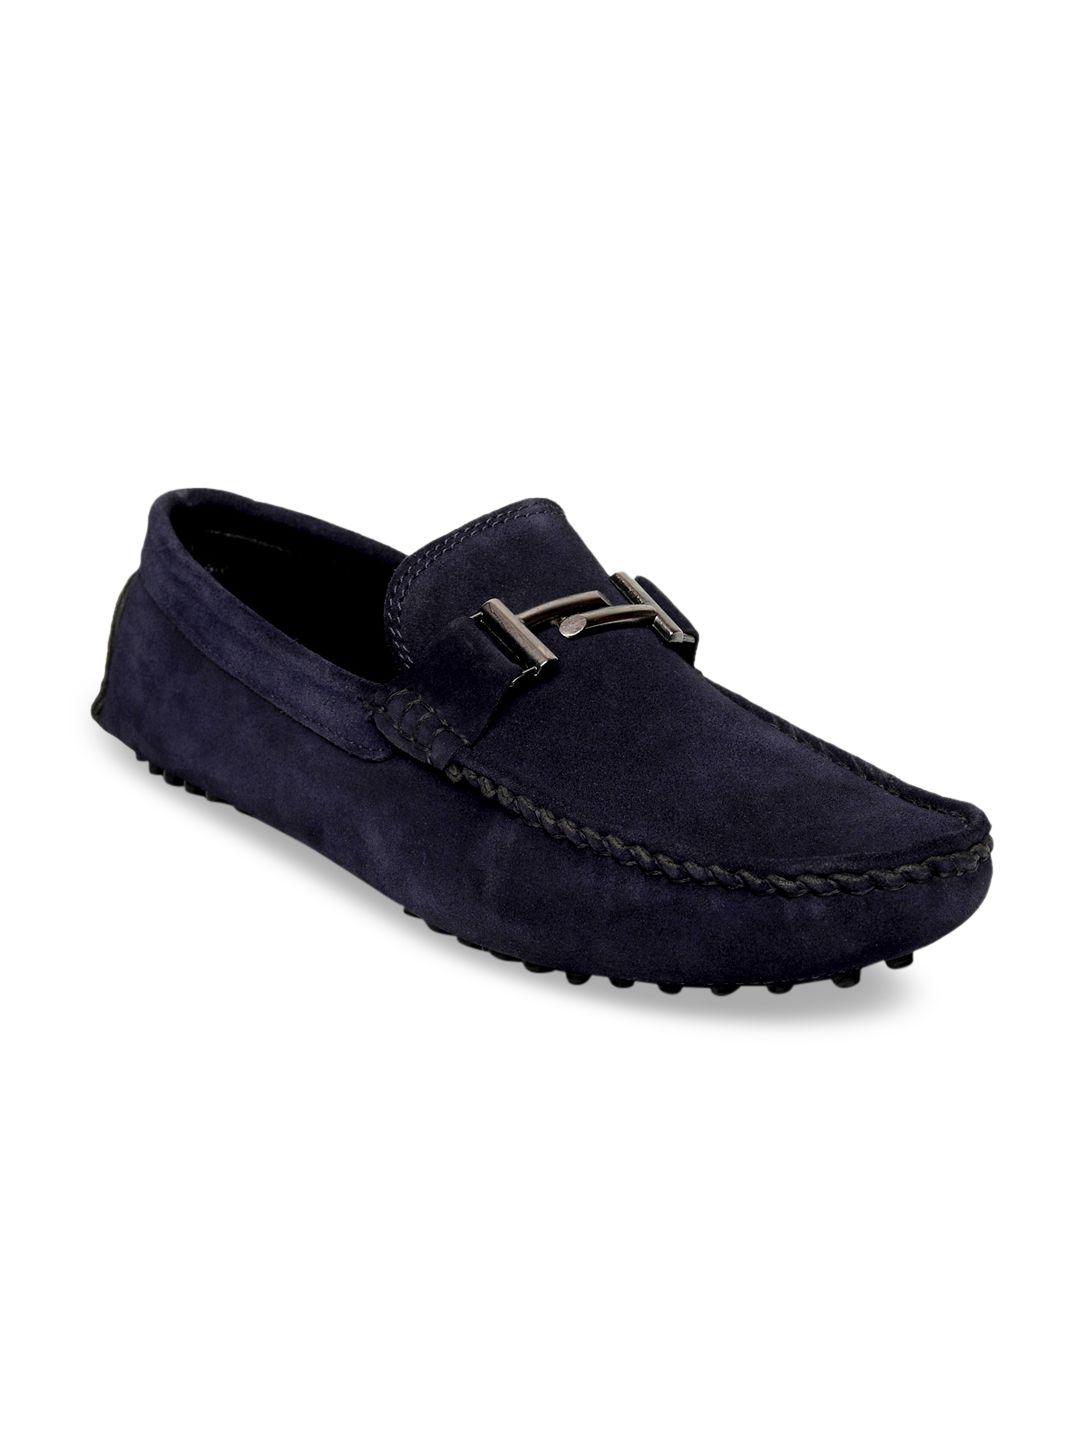 louis stitch men navy blue solid suede driving shoes